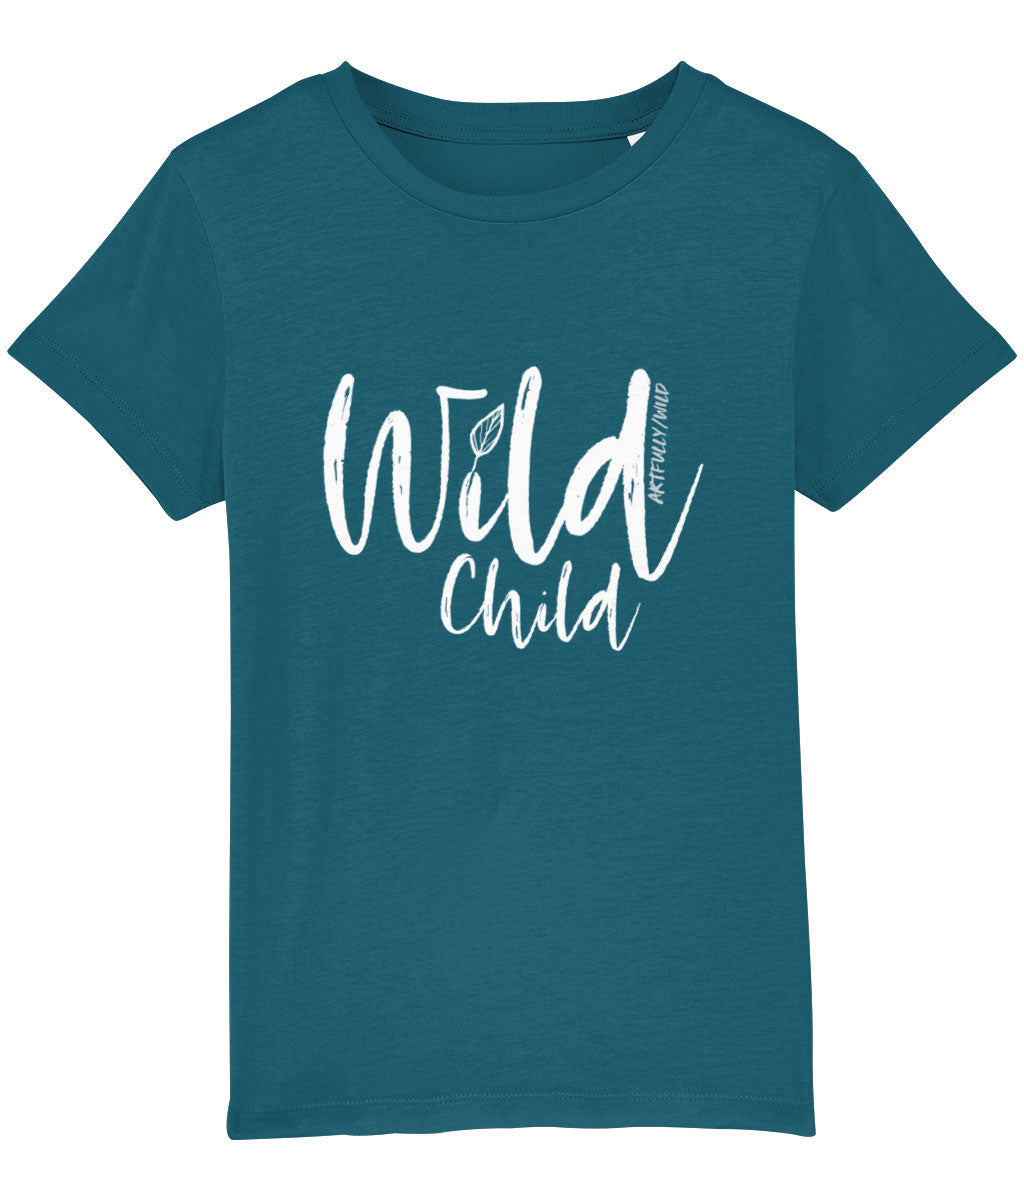 ‘WILD CHILD’ Kids Ocean Blue T-Shirt for Boys & Girls. Eco-friendly organic cotton. White slogan print with water-based inks. Original Design by Artfully Wild.